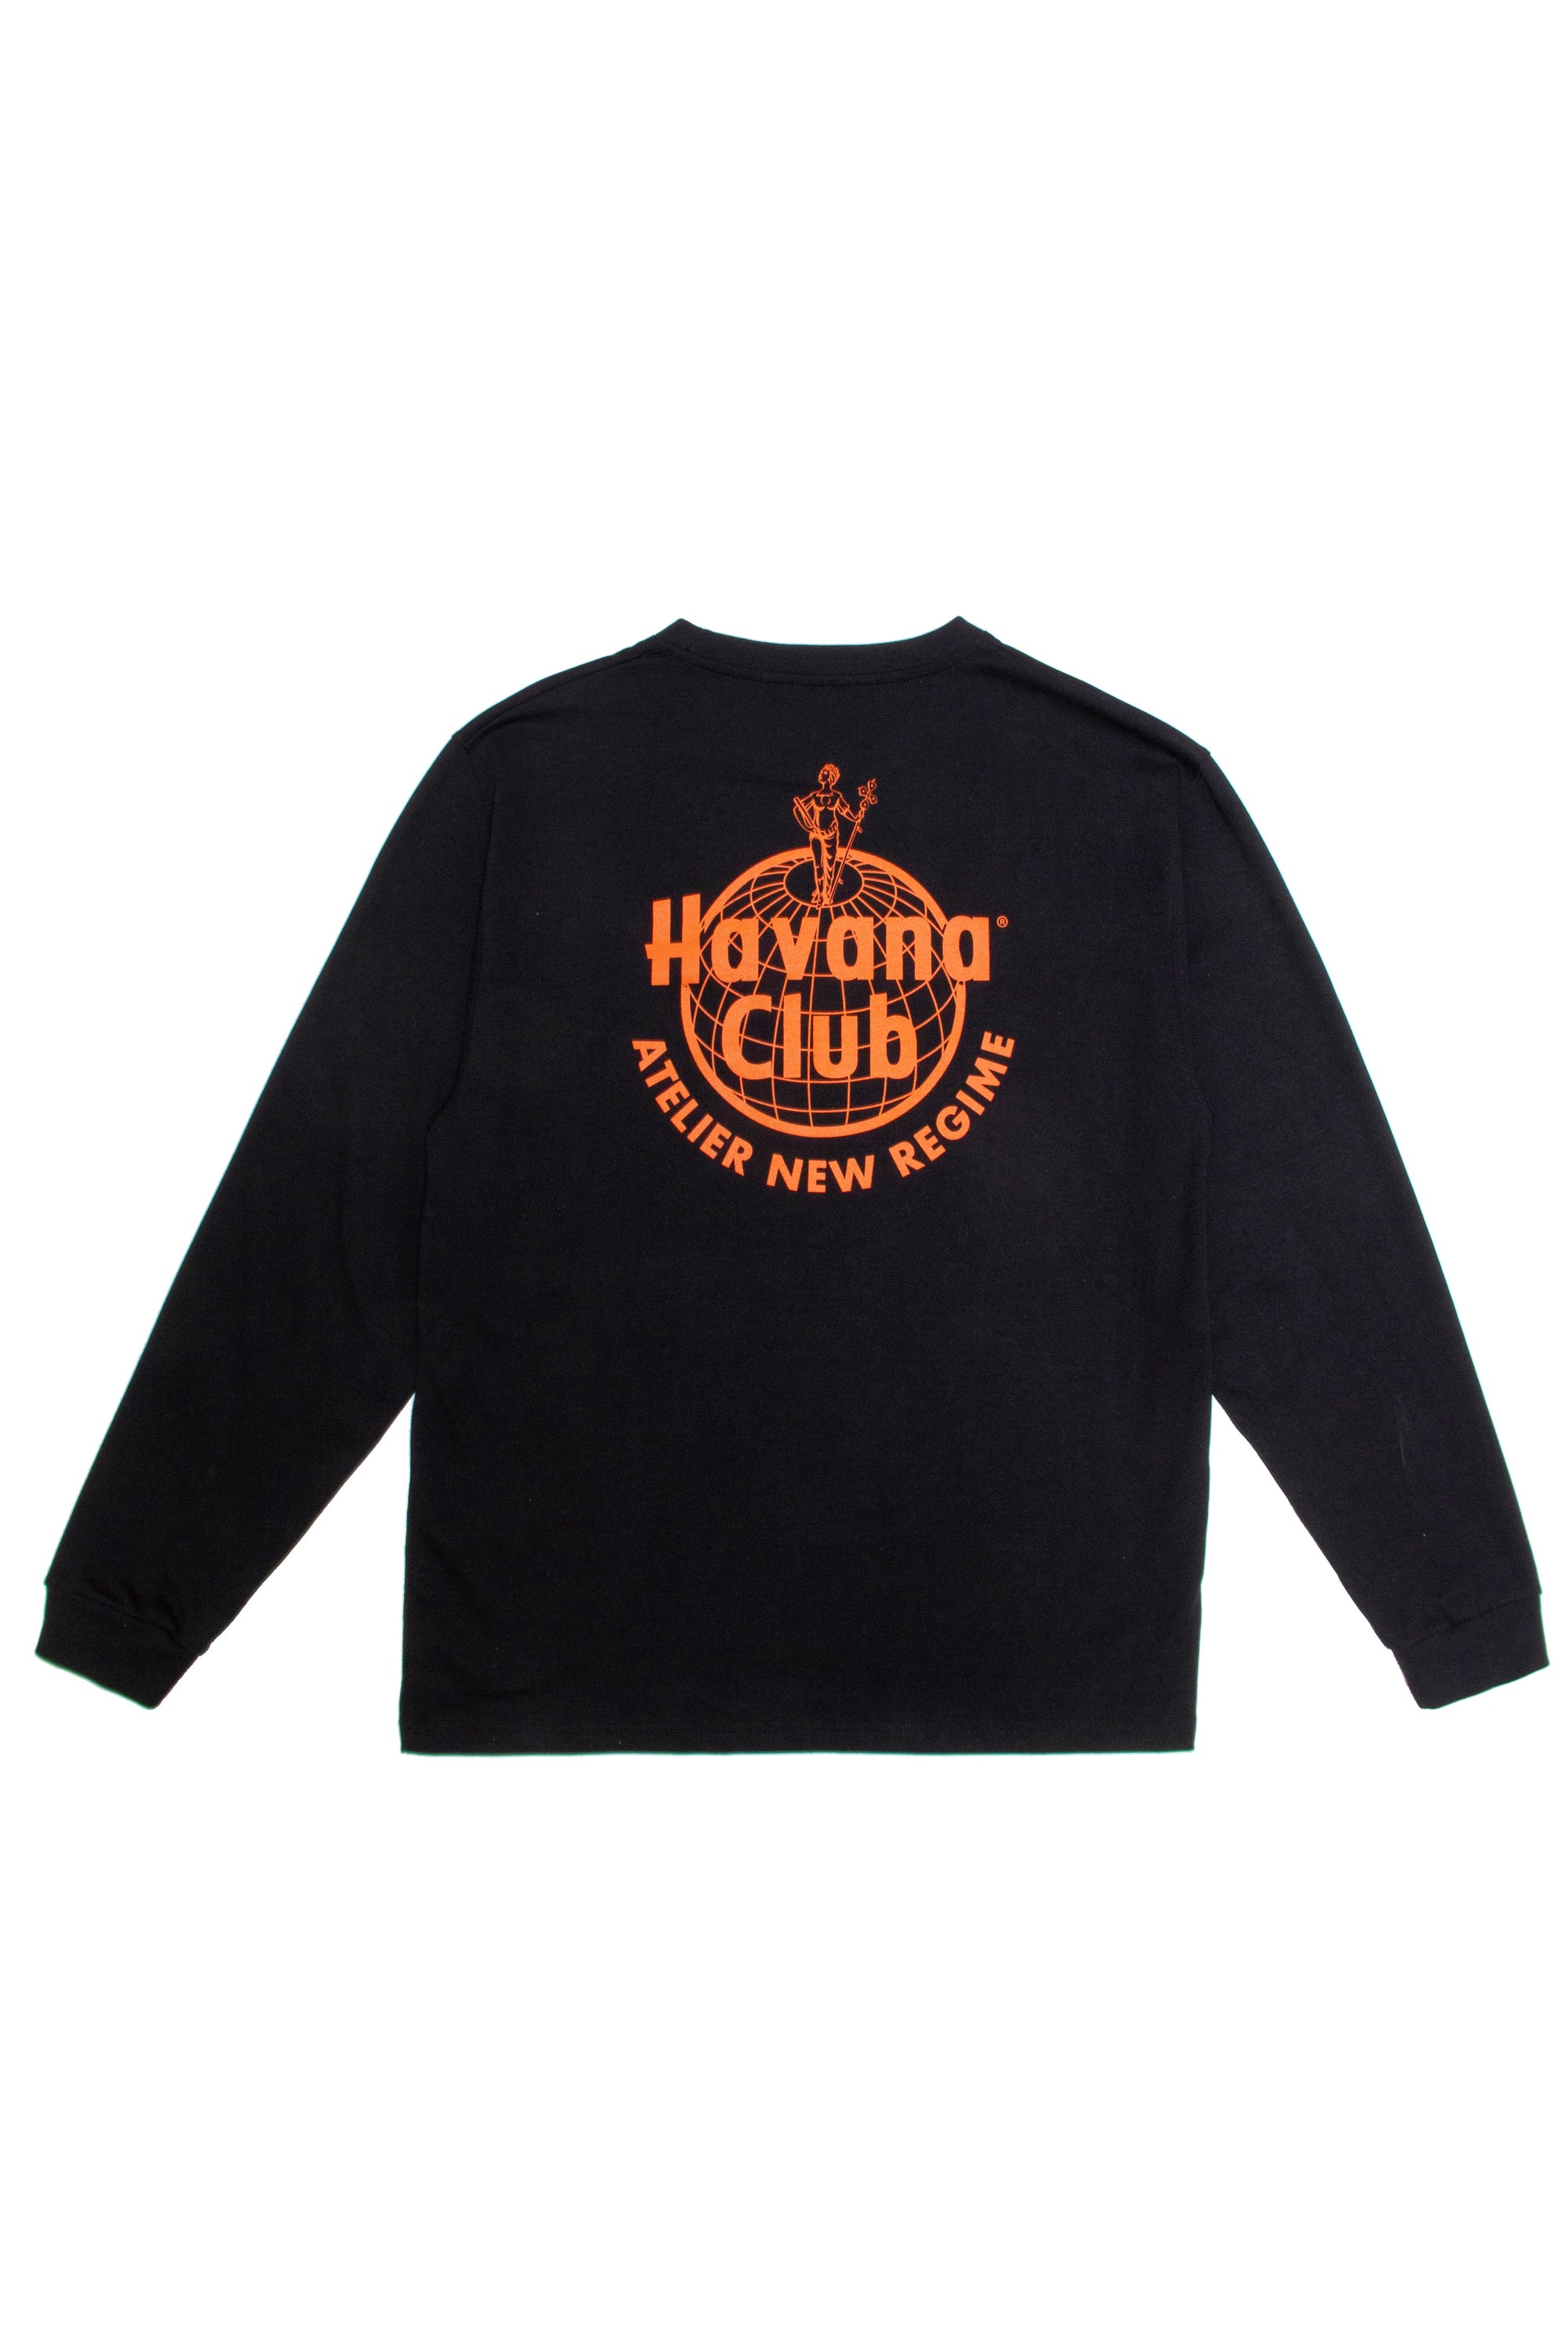 Havana Club Long Sleeve